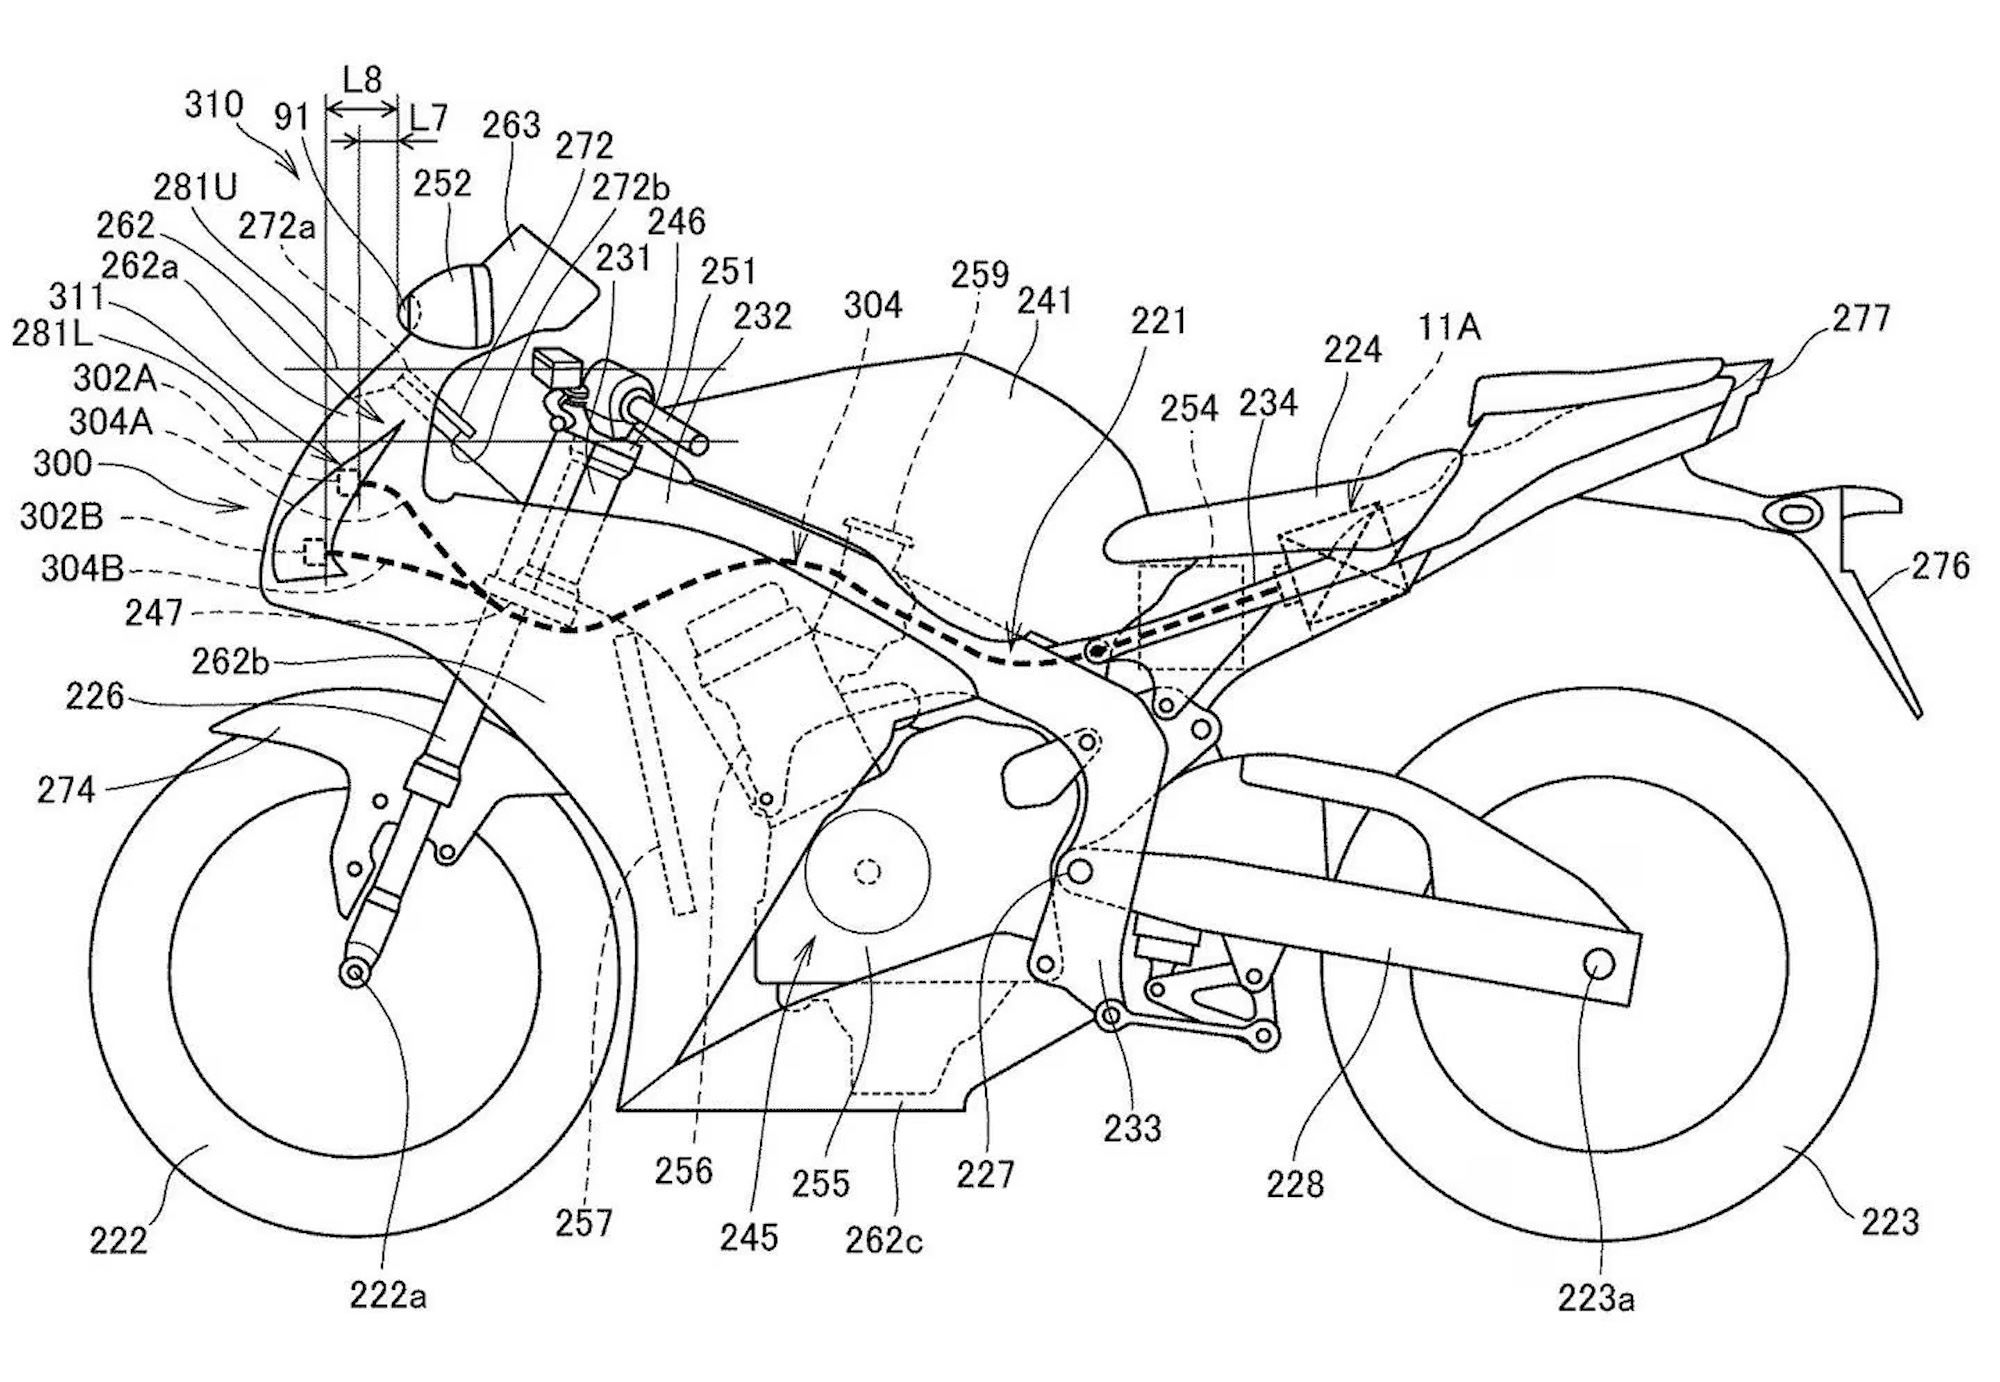 Yamaha patent blueprint showing side profile of a Yamaha motorcycle.